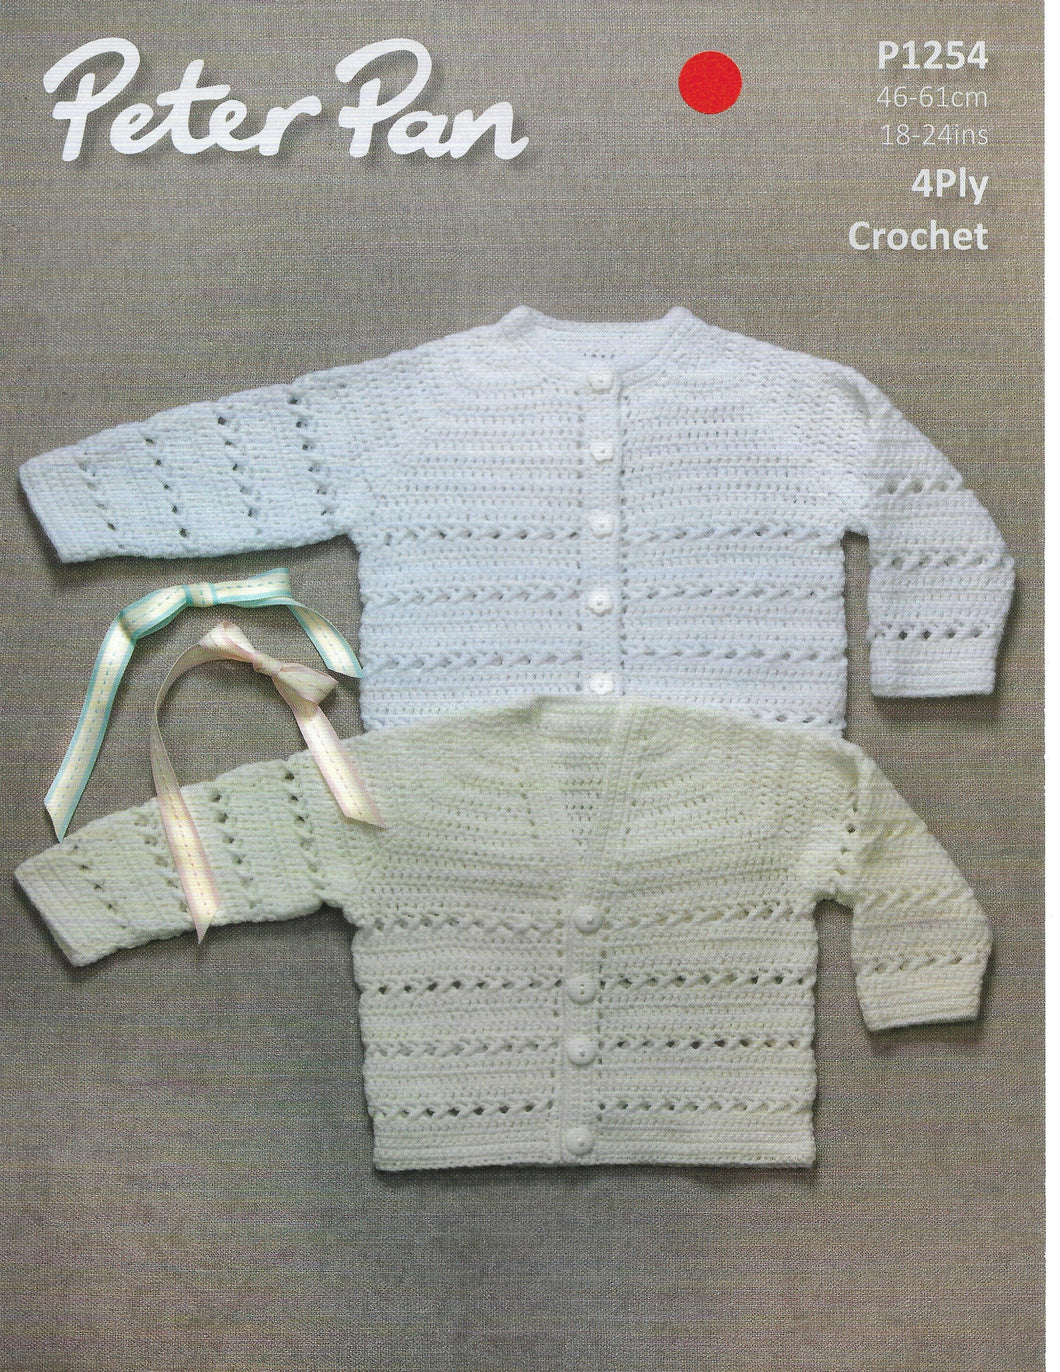 Crochet Pattern Leaflet Peter Pan p1254 4ply Round & V Neck Cardigans